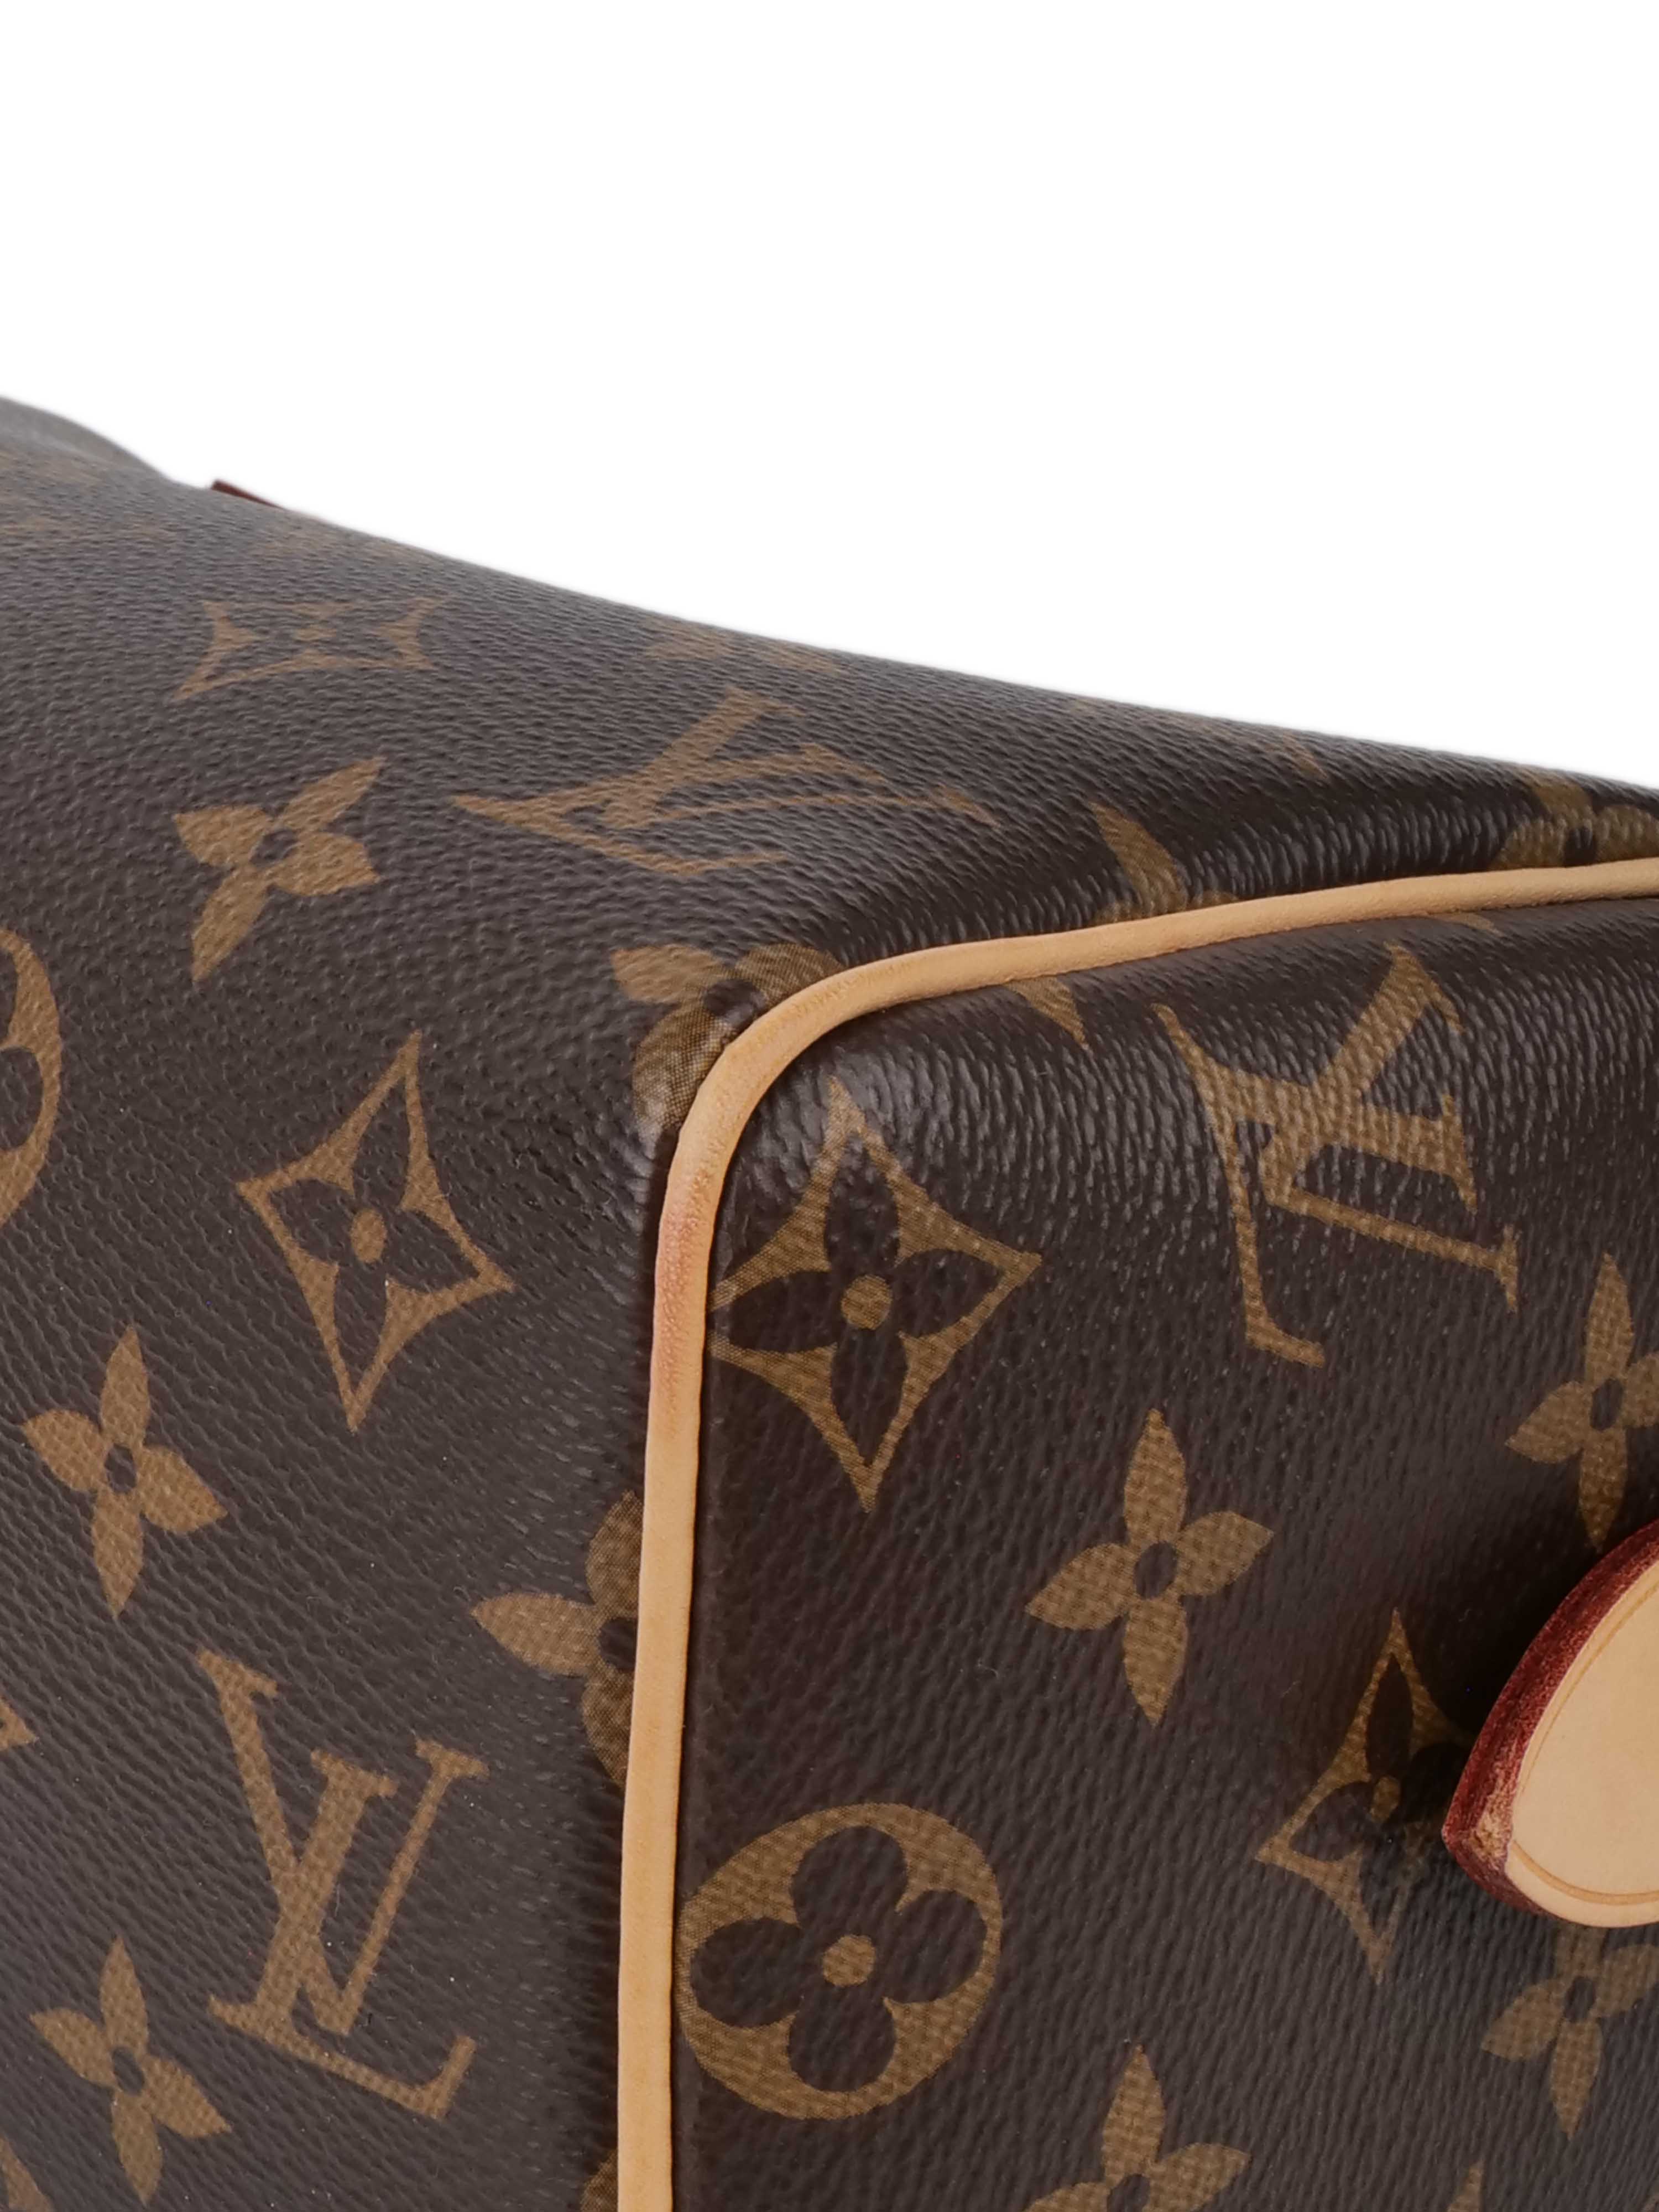 Louis Vuitton Monogram Speedy 20 Bag.